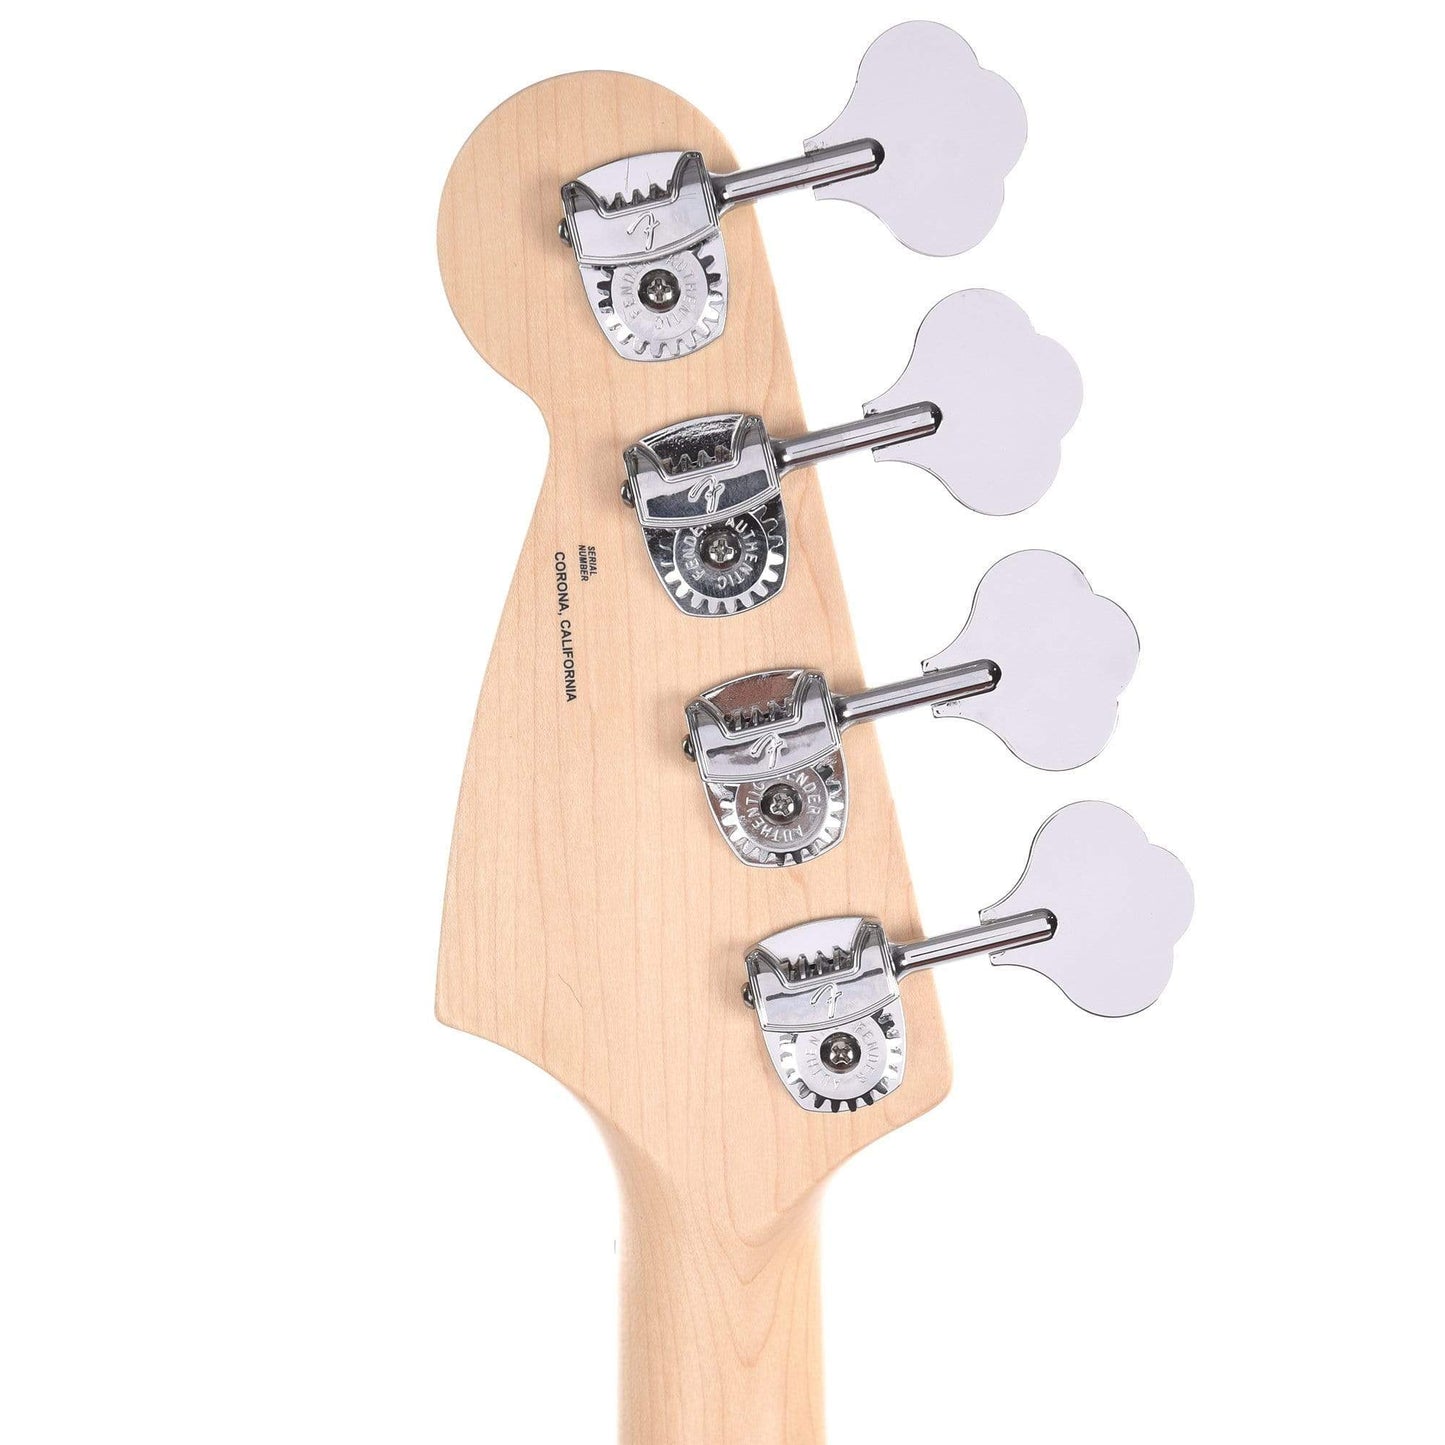 Fender American Performer Mustang Bass 3-Color Sunburst Bass Guitars / 4-String